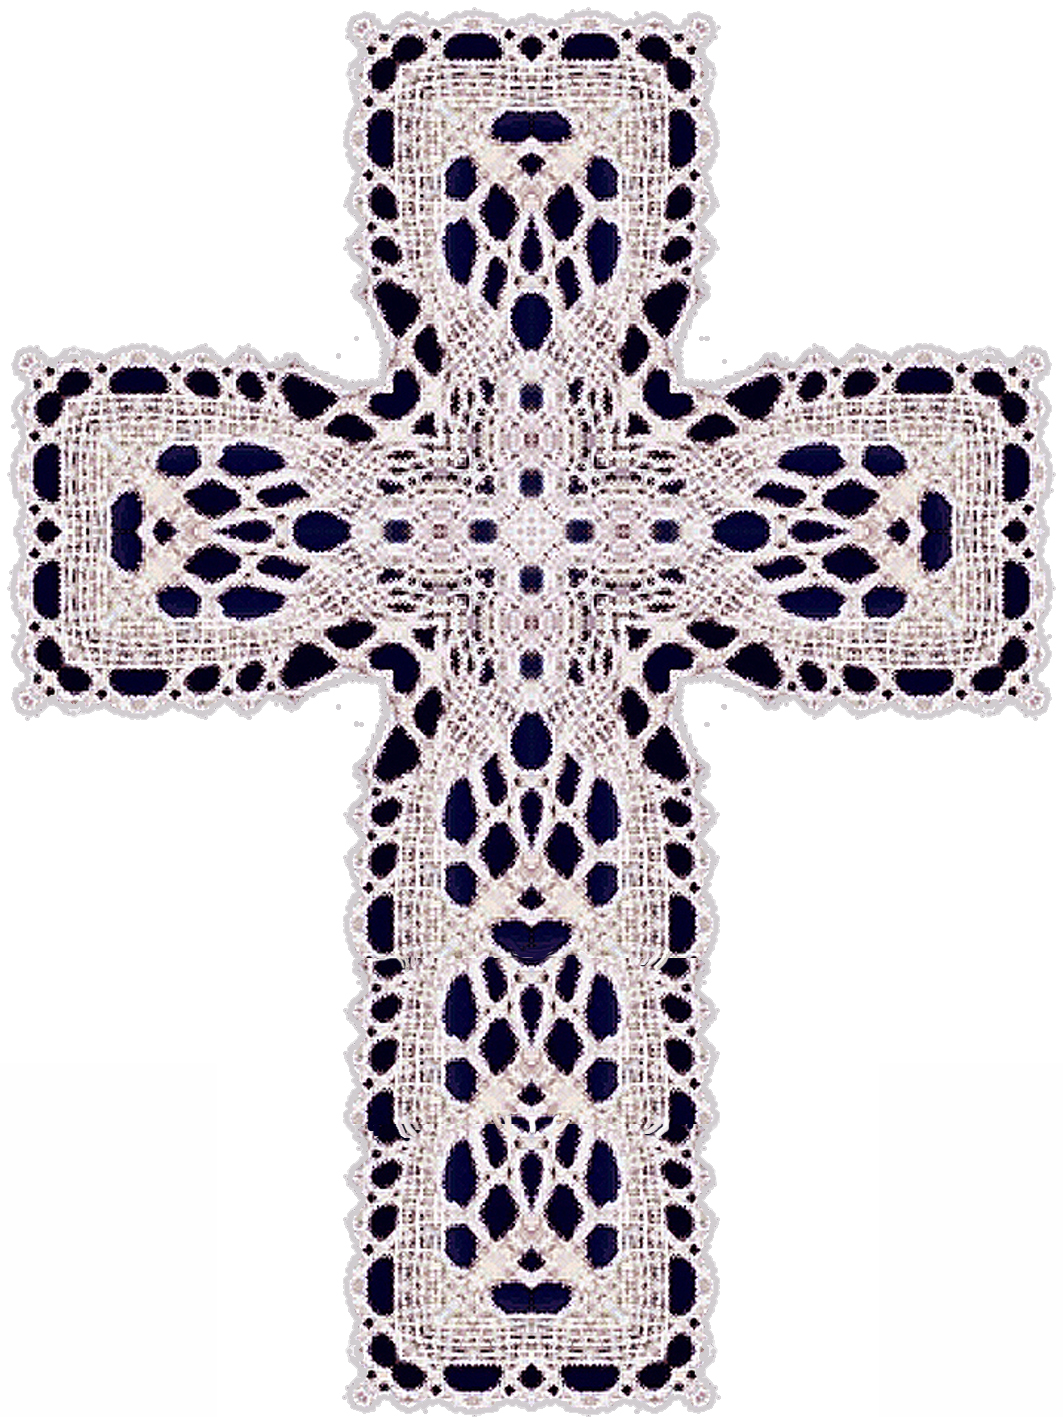 ArtbyJean - Easter Clip Art: Lace crochet design on an Easter ...